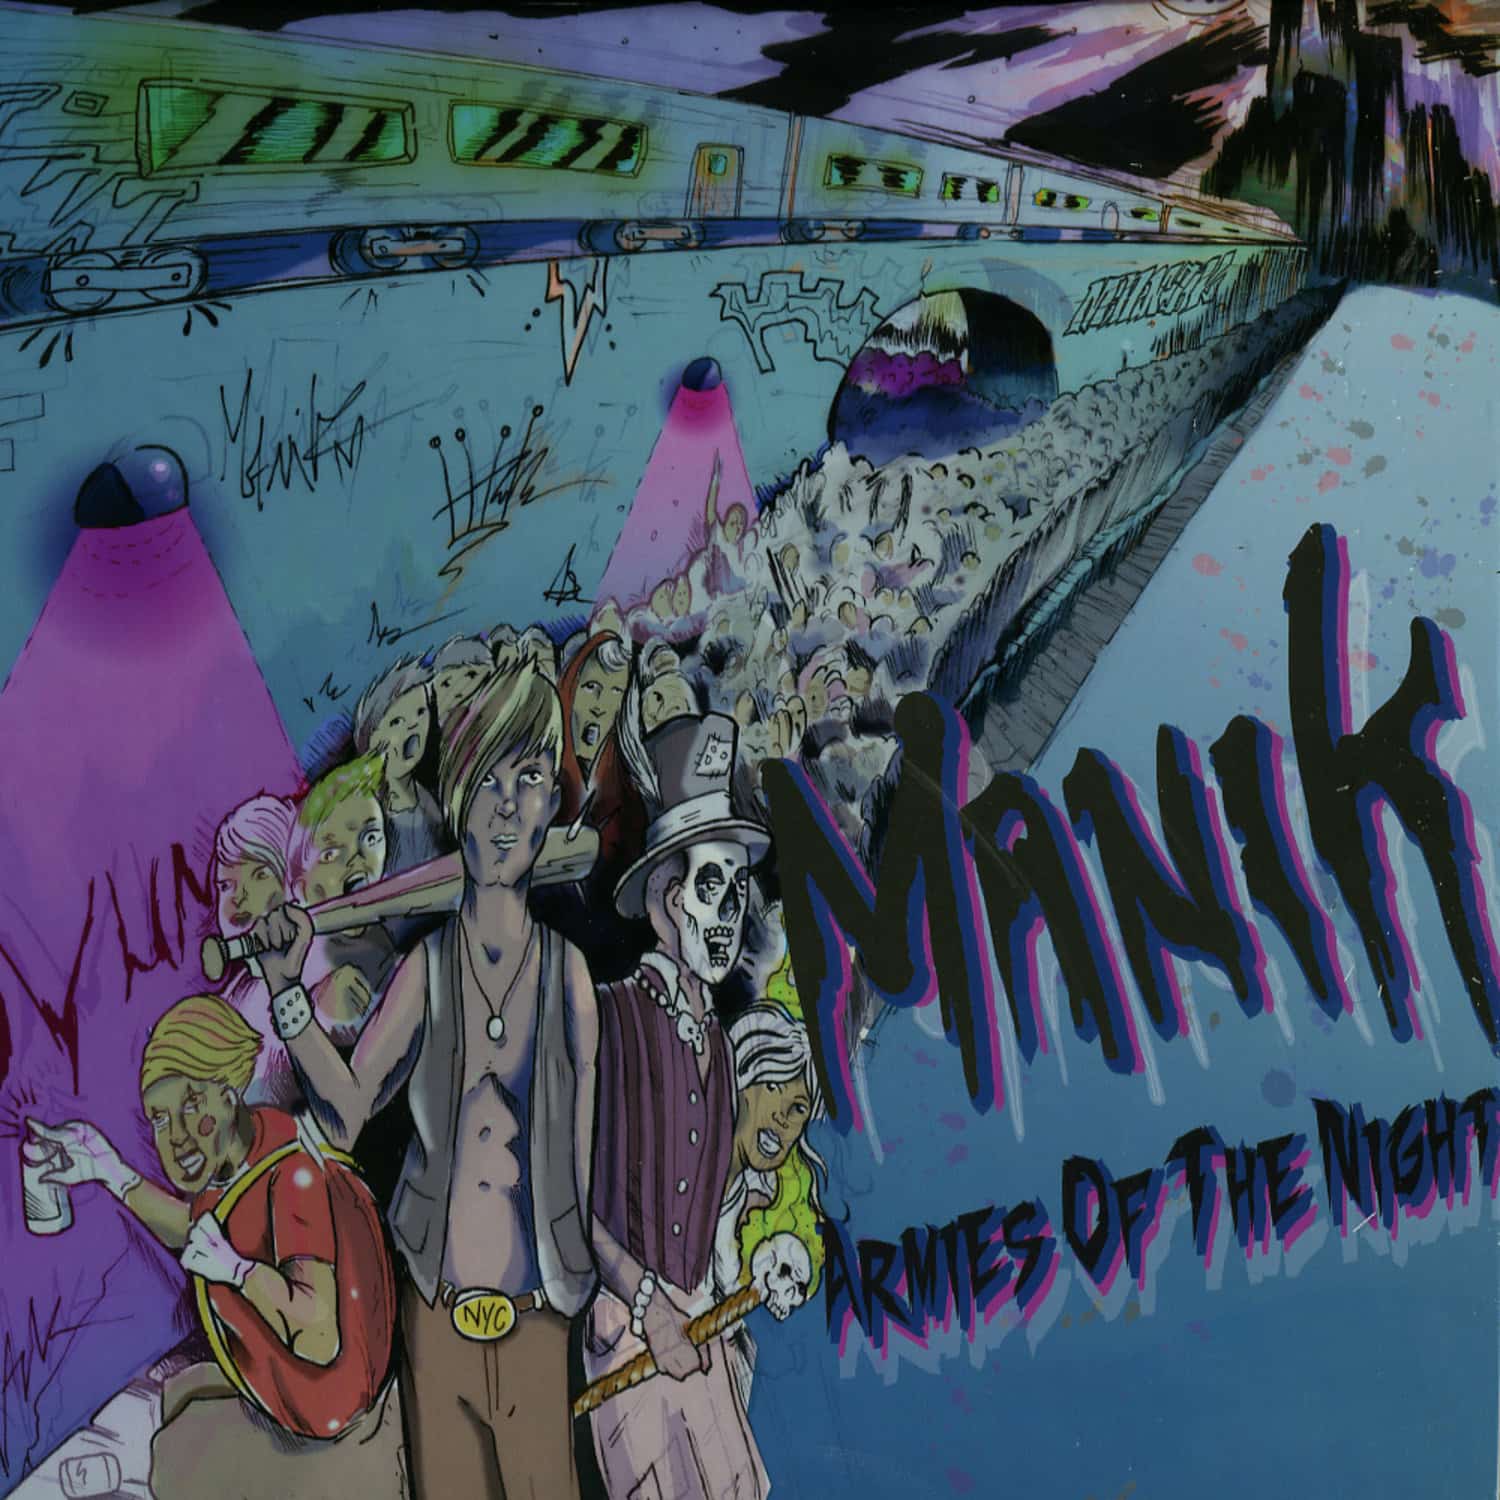 Manik - ARMIES OF THE NIGHT EP